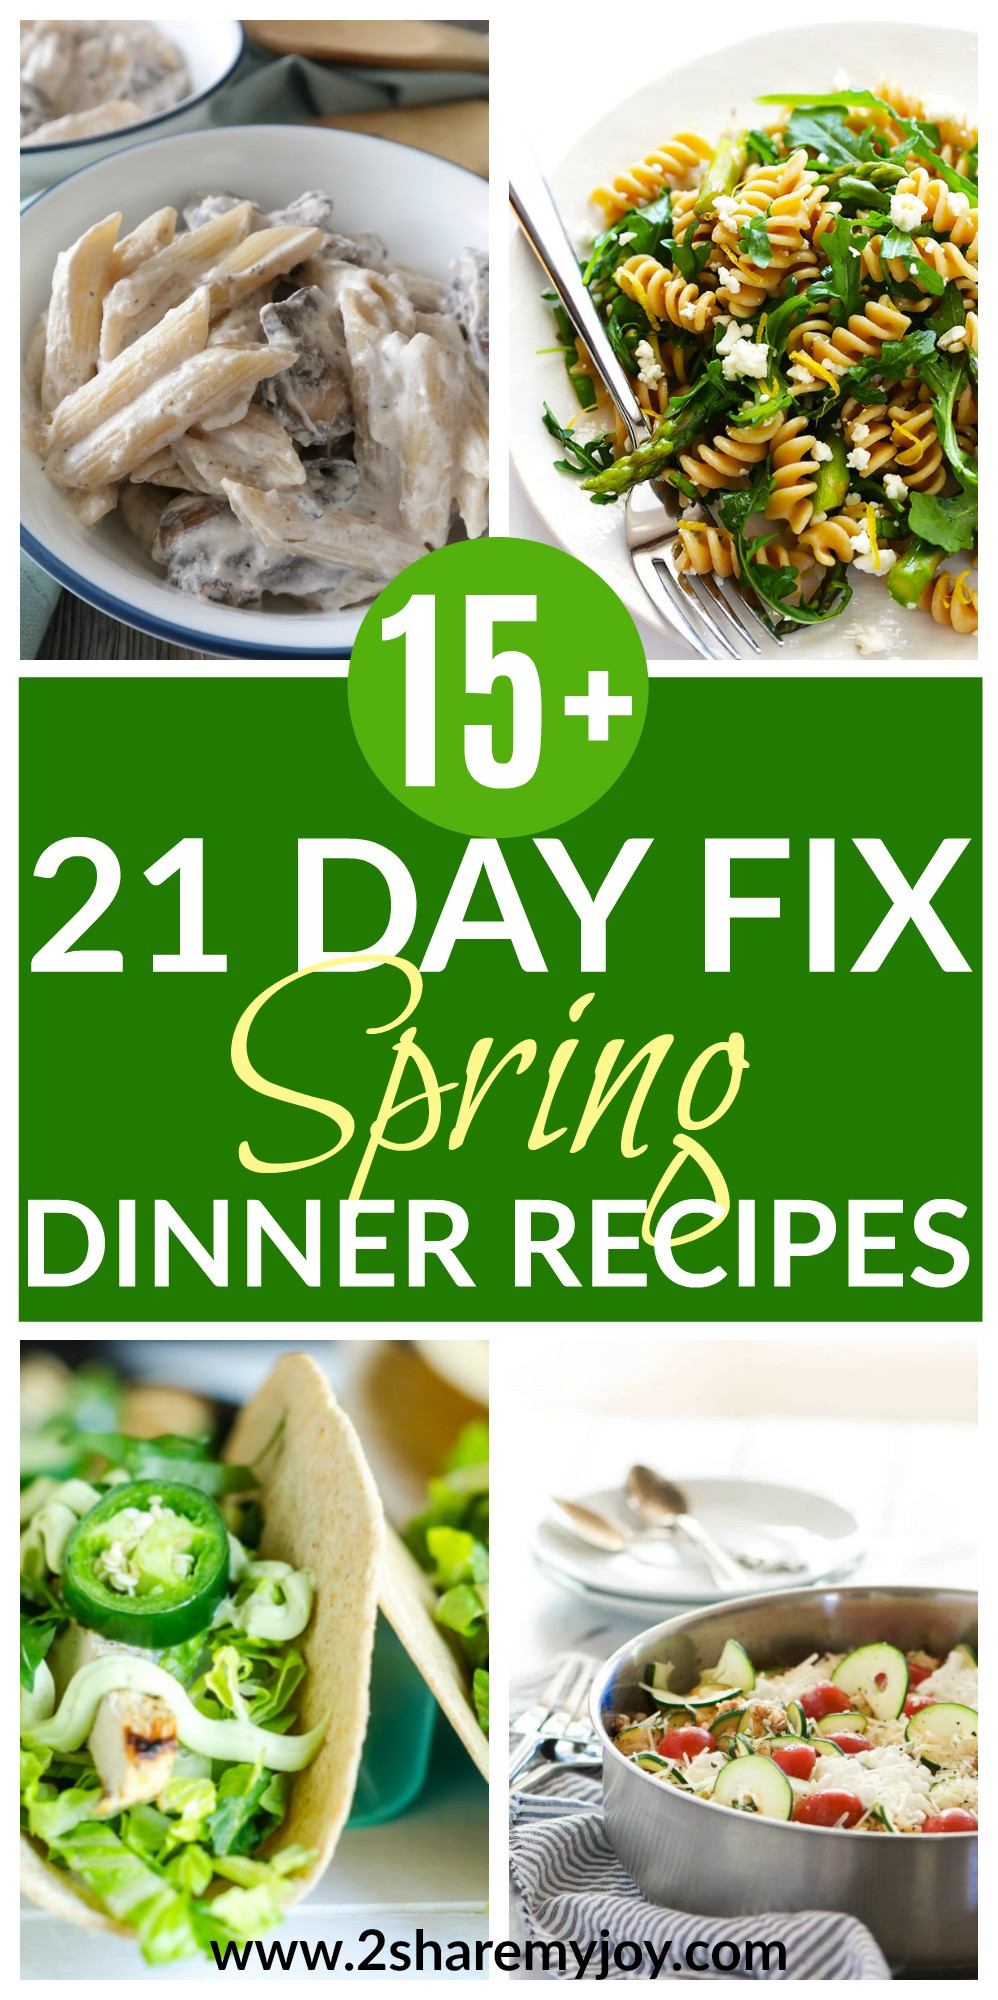 Spring Dinner Recipes
 21 Day Fix Spring Dinner Recipes also for summer